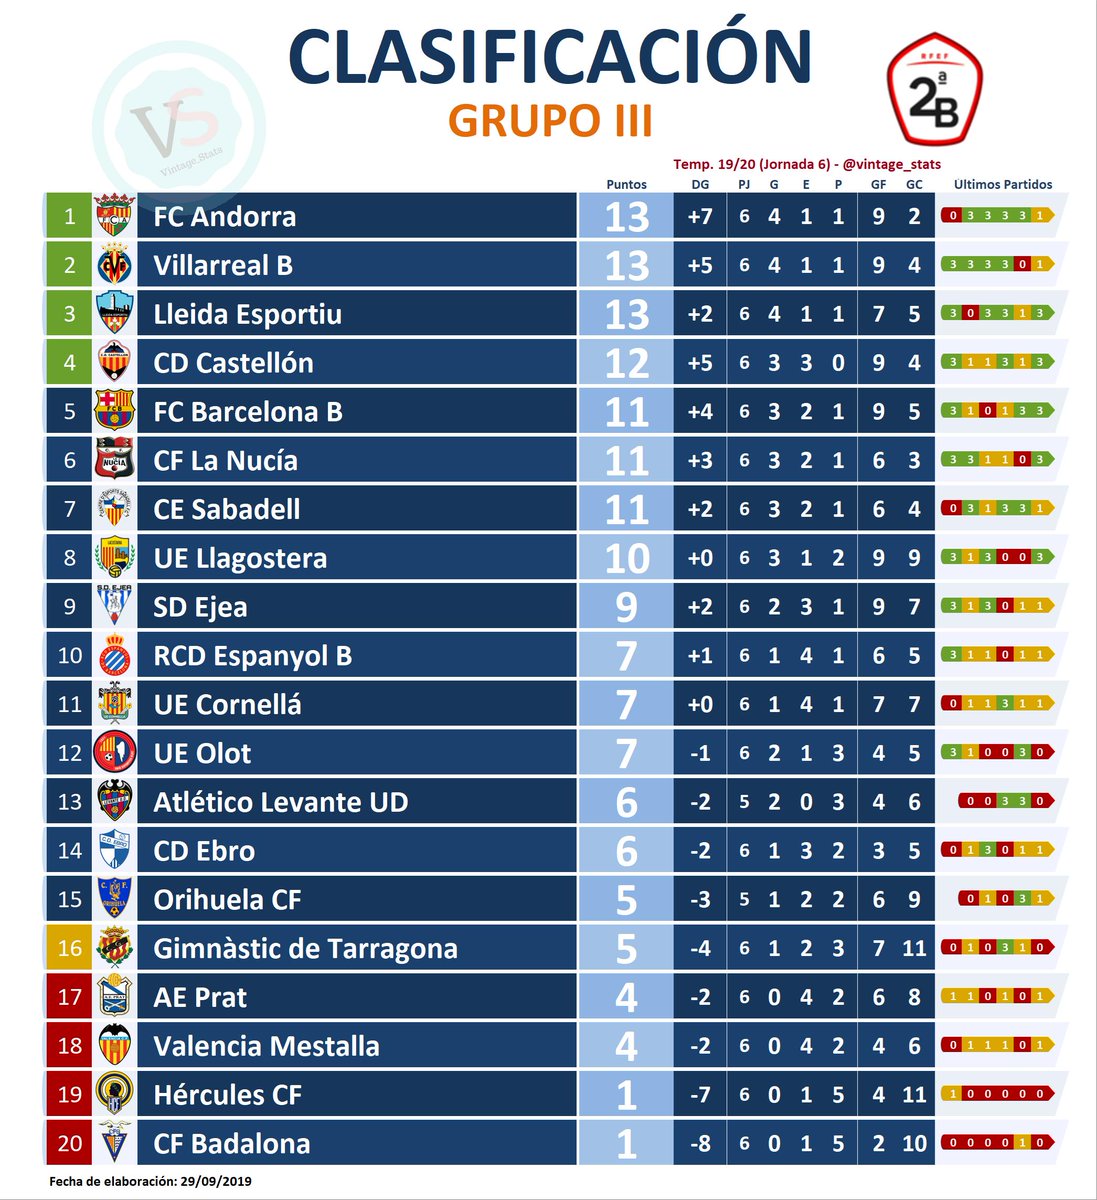 vintage_stats on Twitter: #Ranking #2bg3 Jornada 6 🔝🔟 CLASIFICACIÓN GRUPO III de #SegundaB [1] @fcandorra [2] @VillarrealCF B [3] @Lleida_Esportiu [4] @CD_Castellon [5] @FCBarcelonaB [6] [7] @CESabadell [8] @UELlagostera [9] @AupaEjea ...